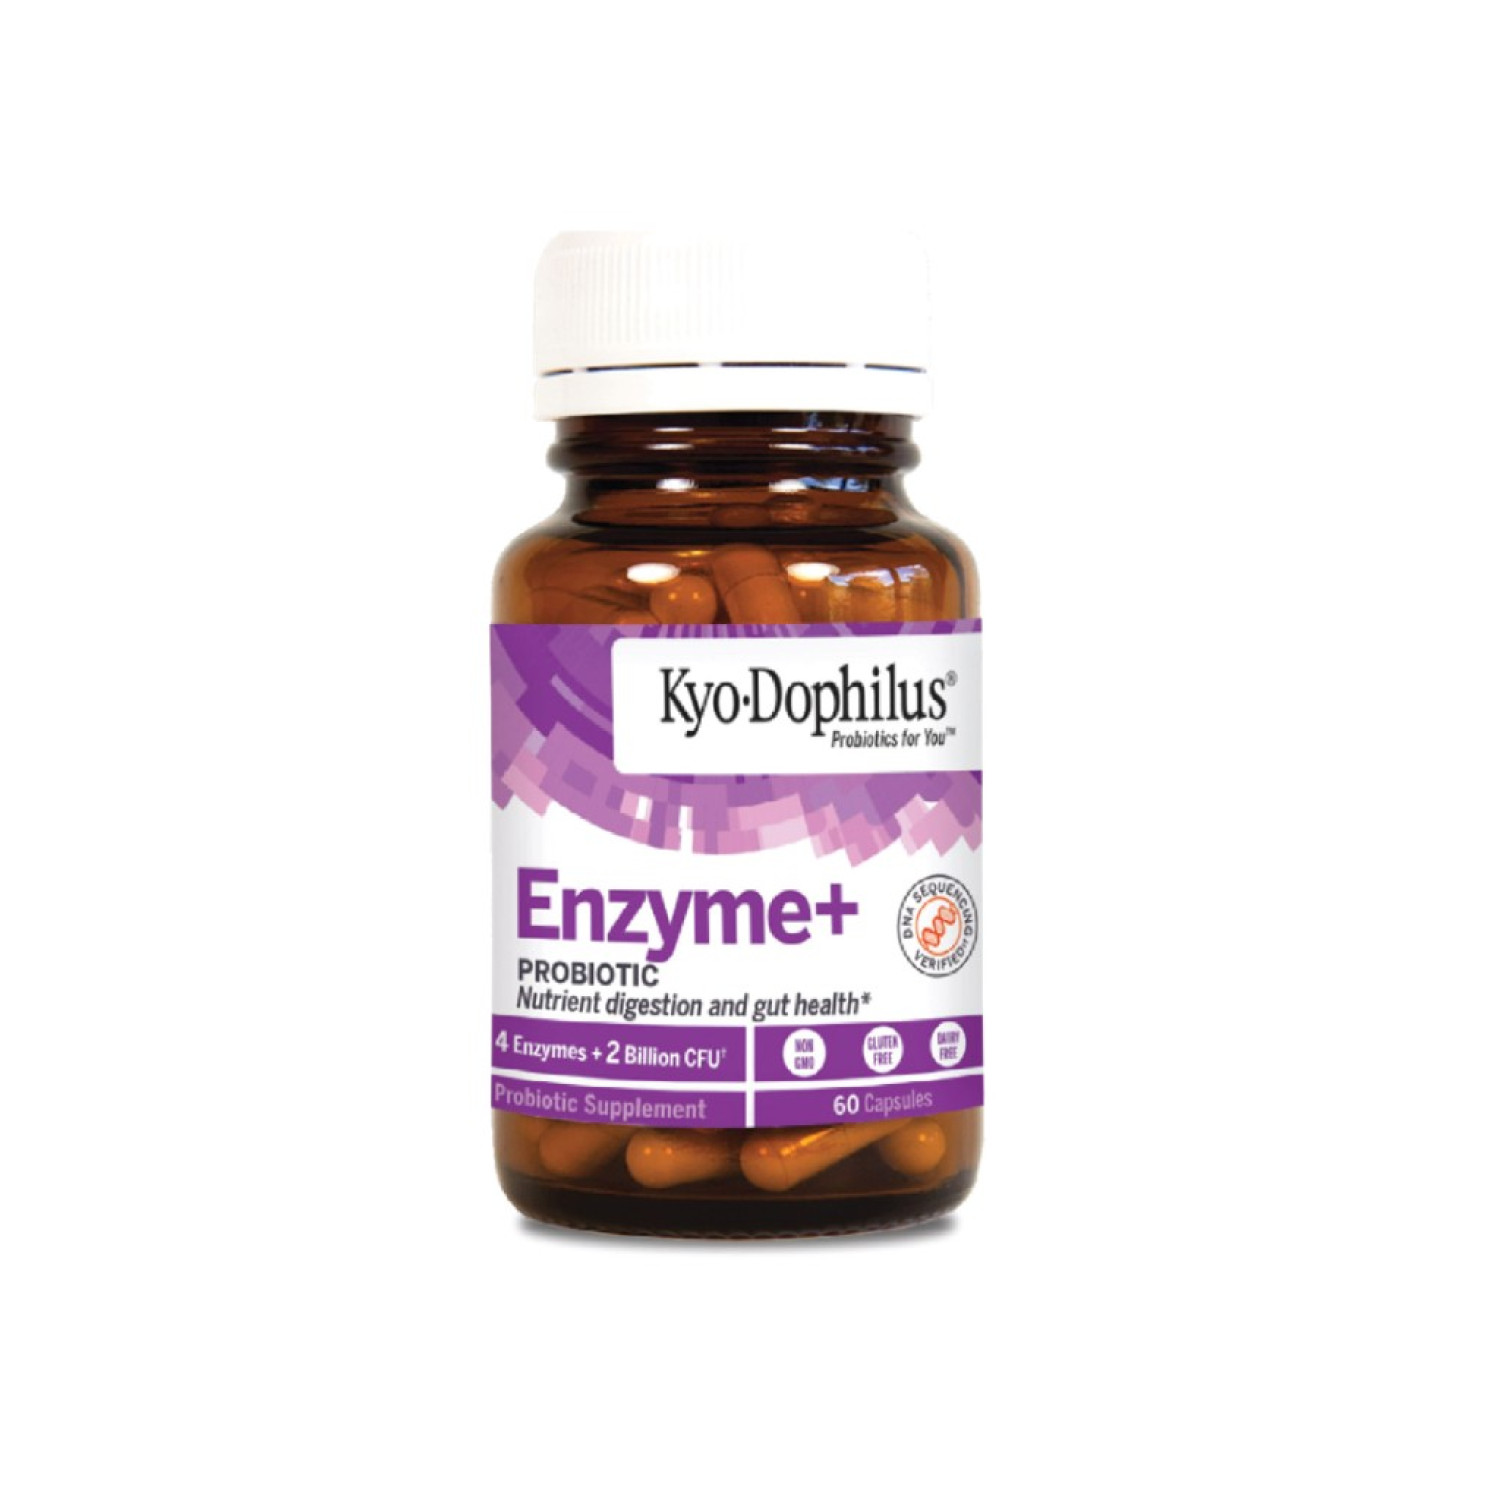 kyolic-dophilus-with-enzymes-probiotic-60-capsules-664c026dbbda6.jpeg